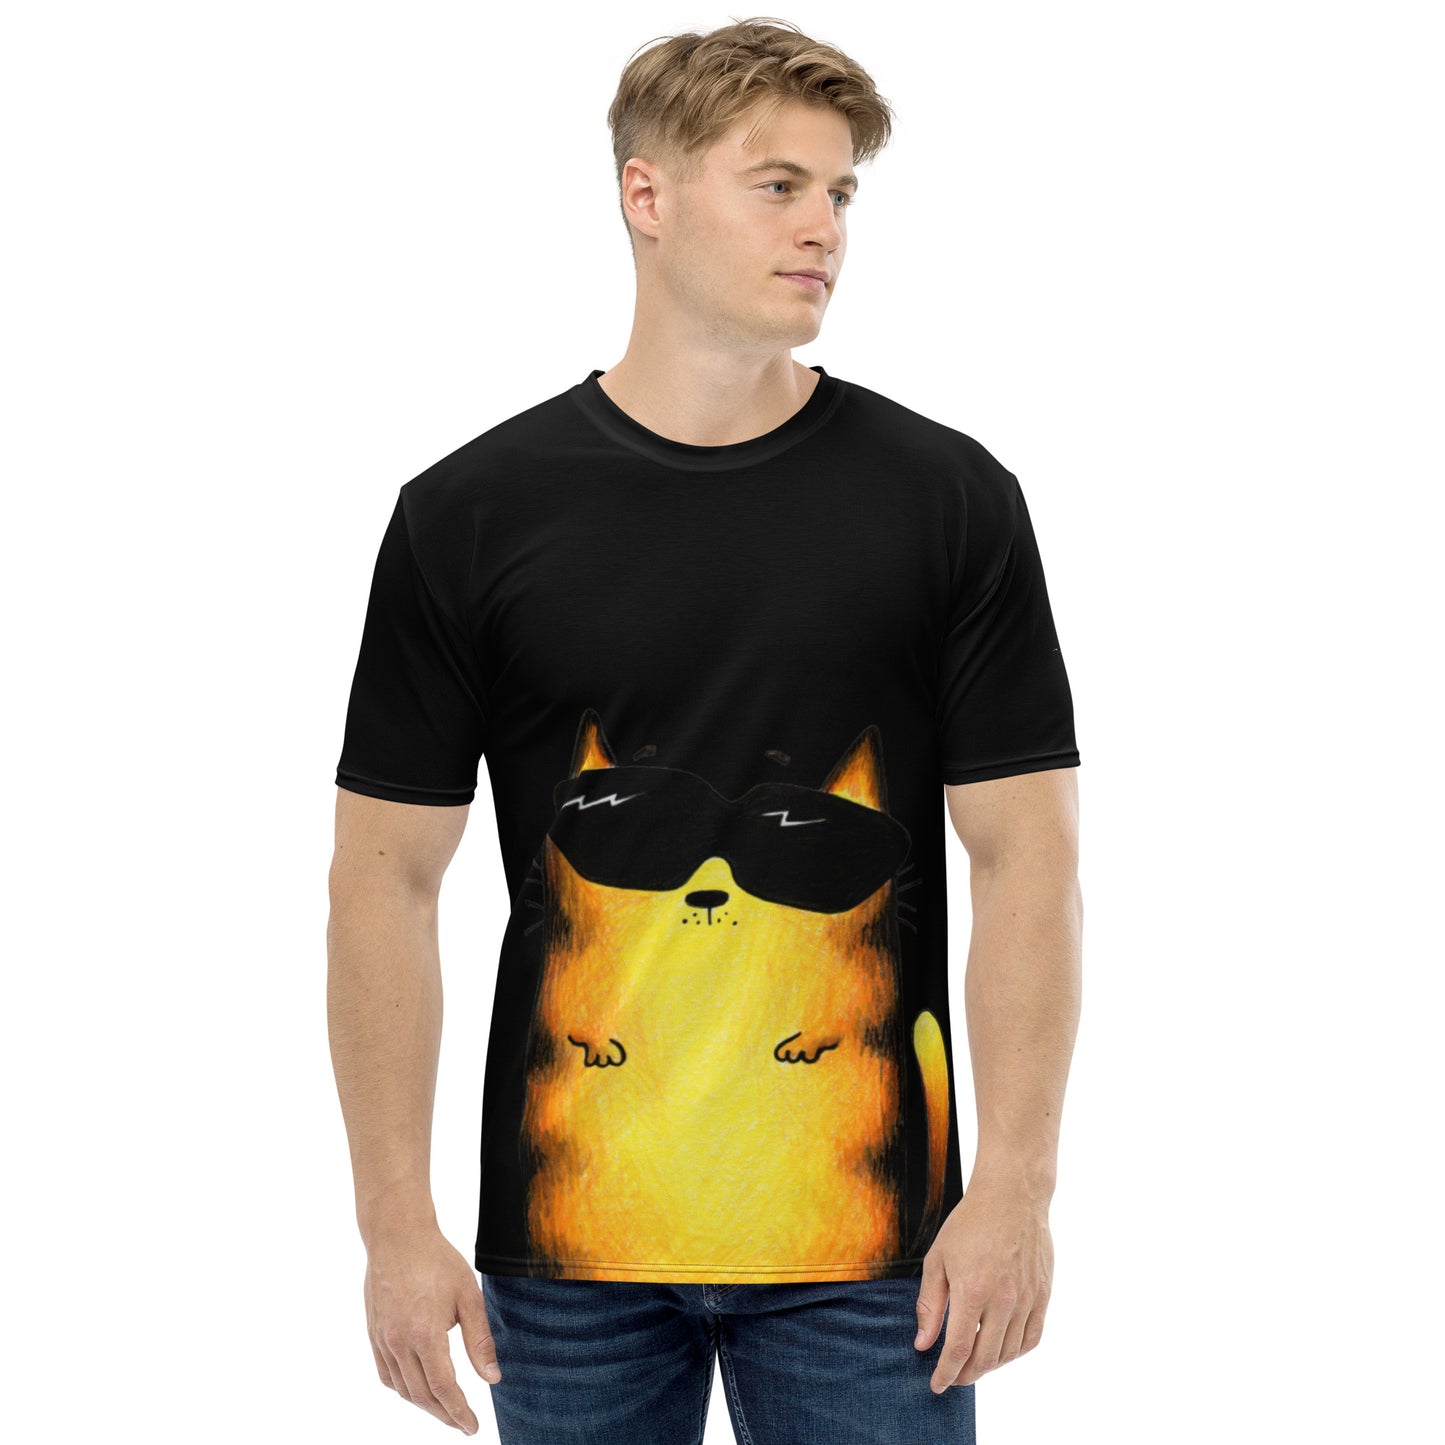 Black regular fit men's t-shirt with yellow cat